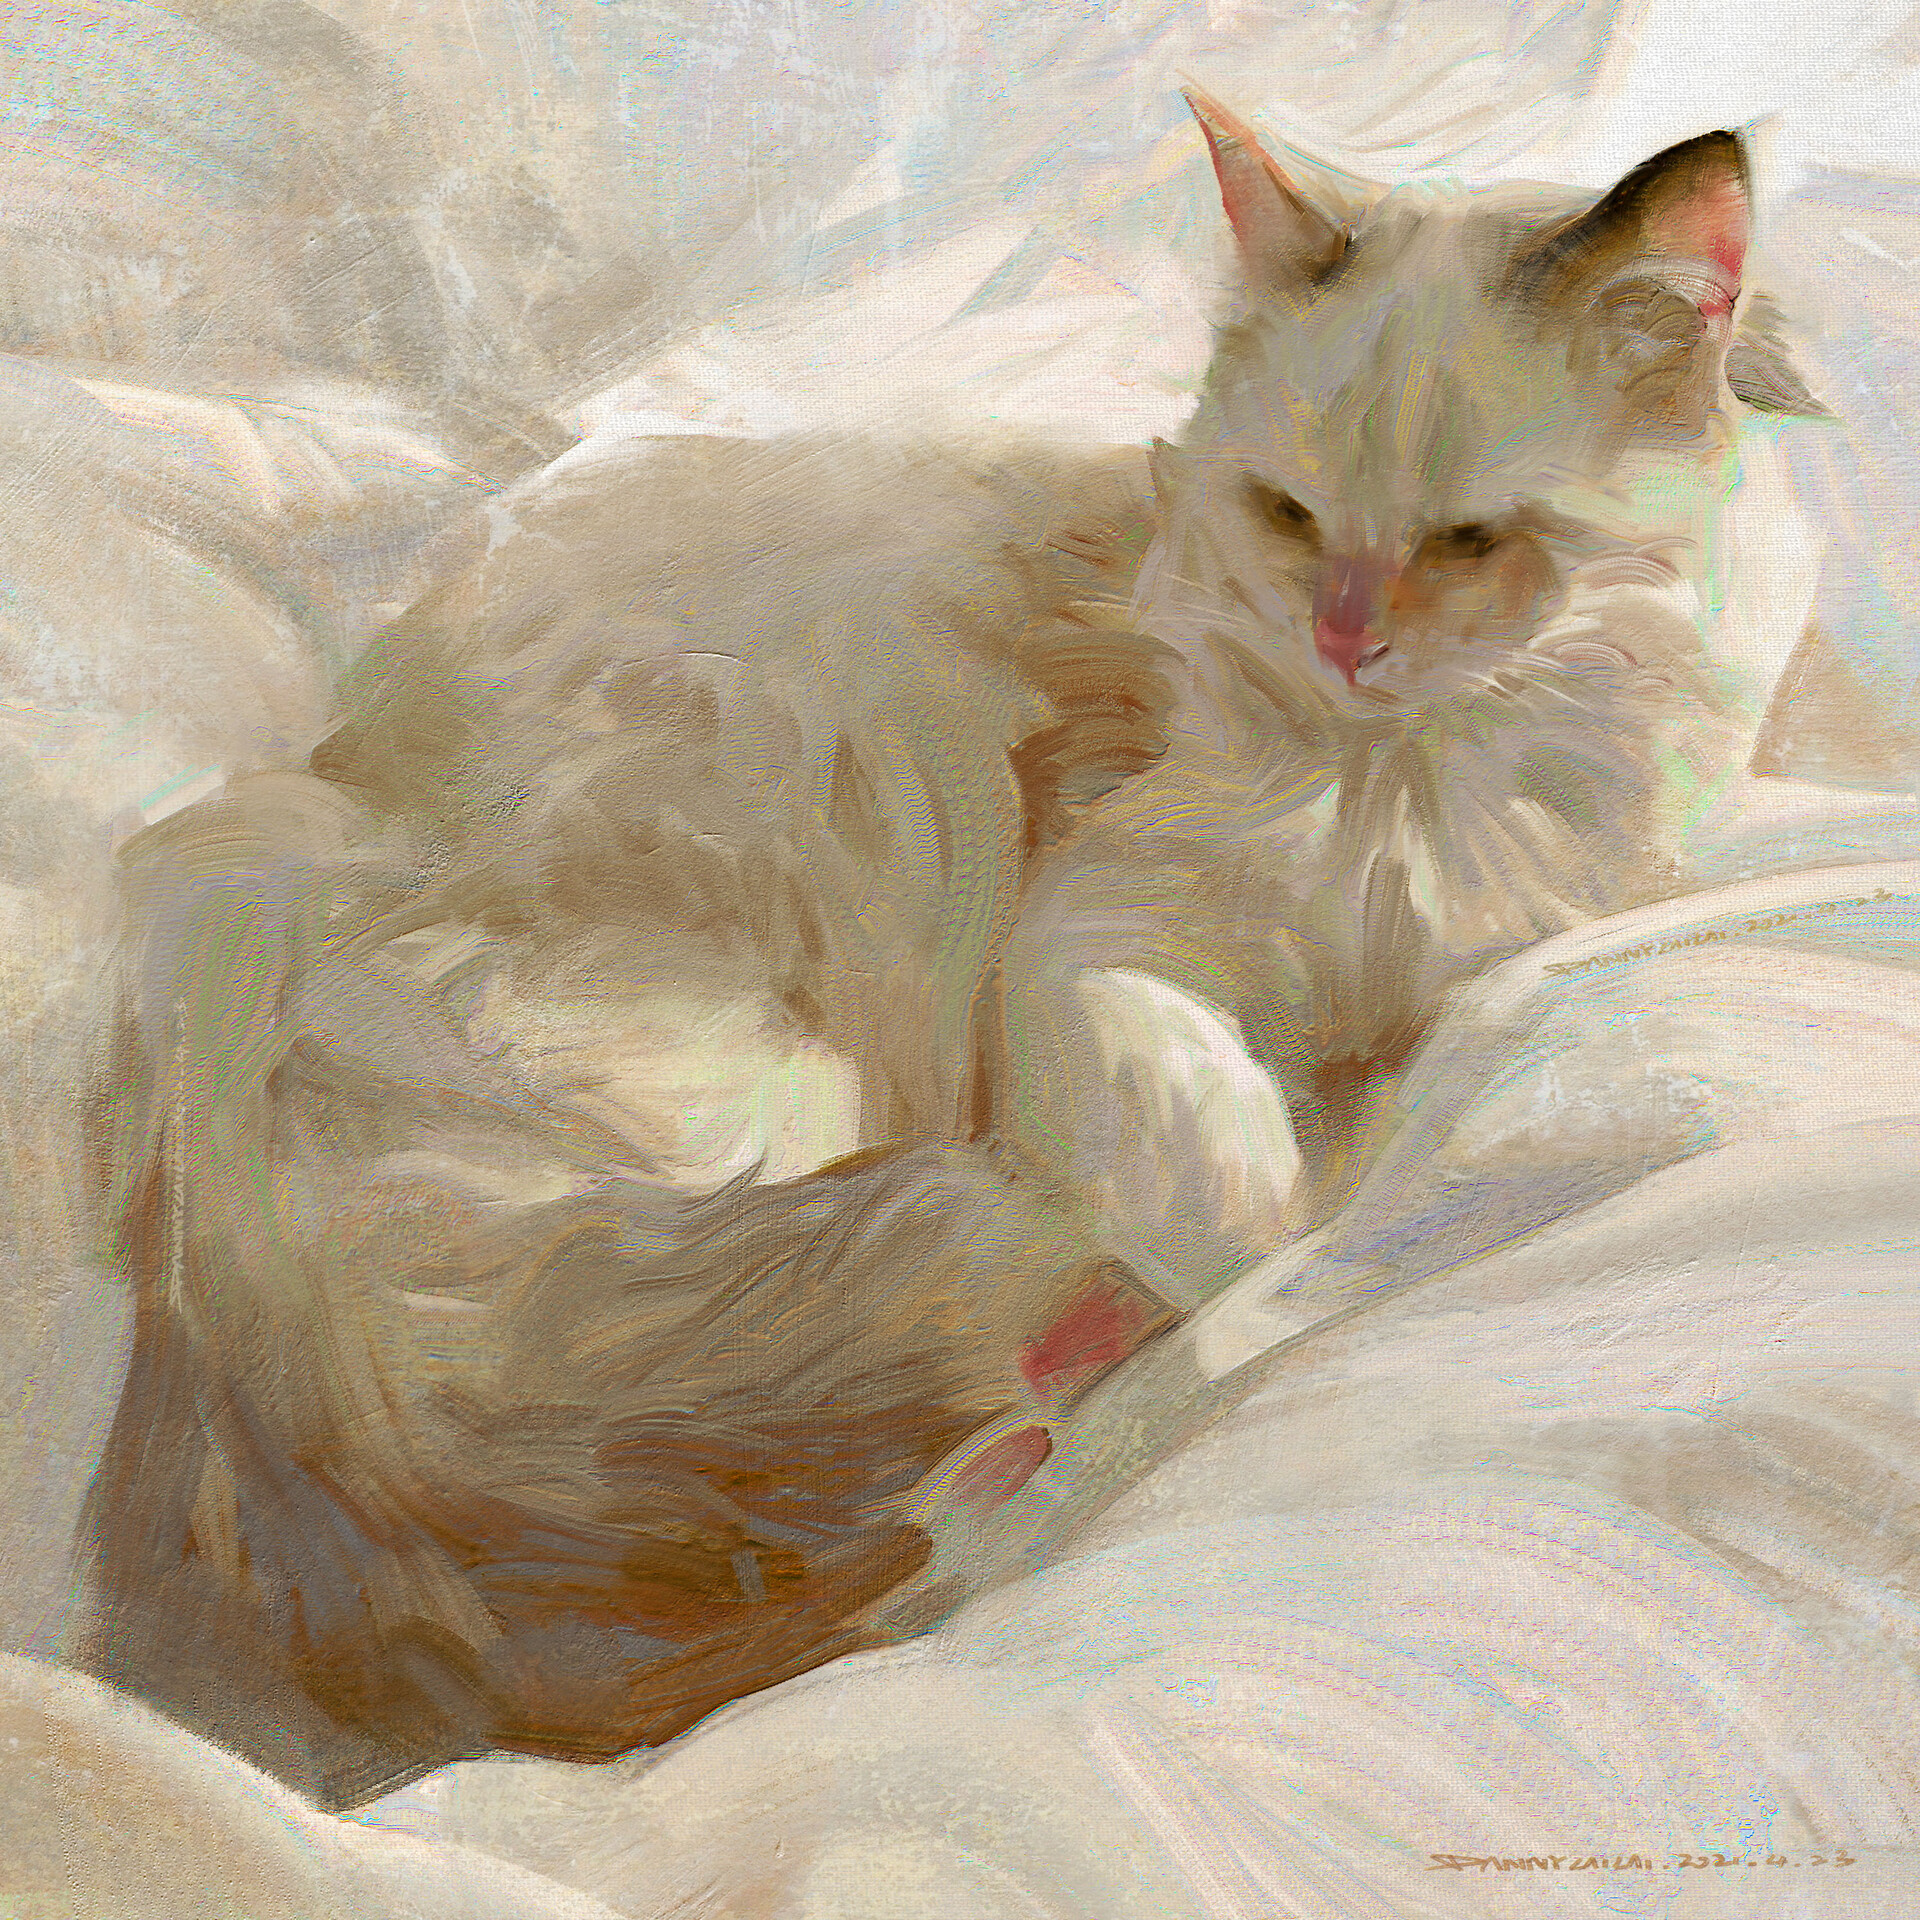 DannyLaiLai Artwork Cats Animals Mammals Feline 1920x1920